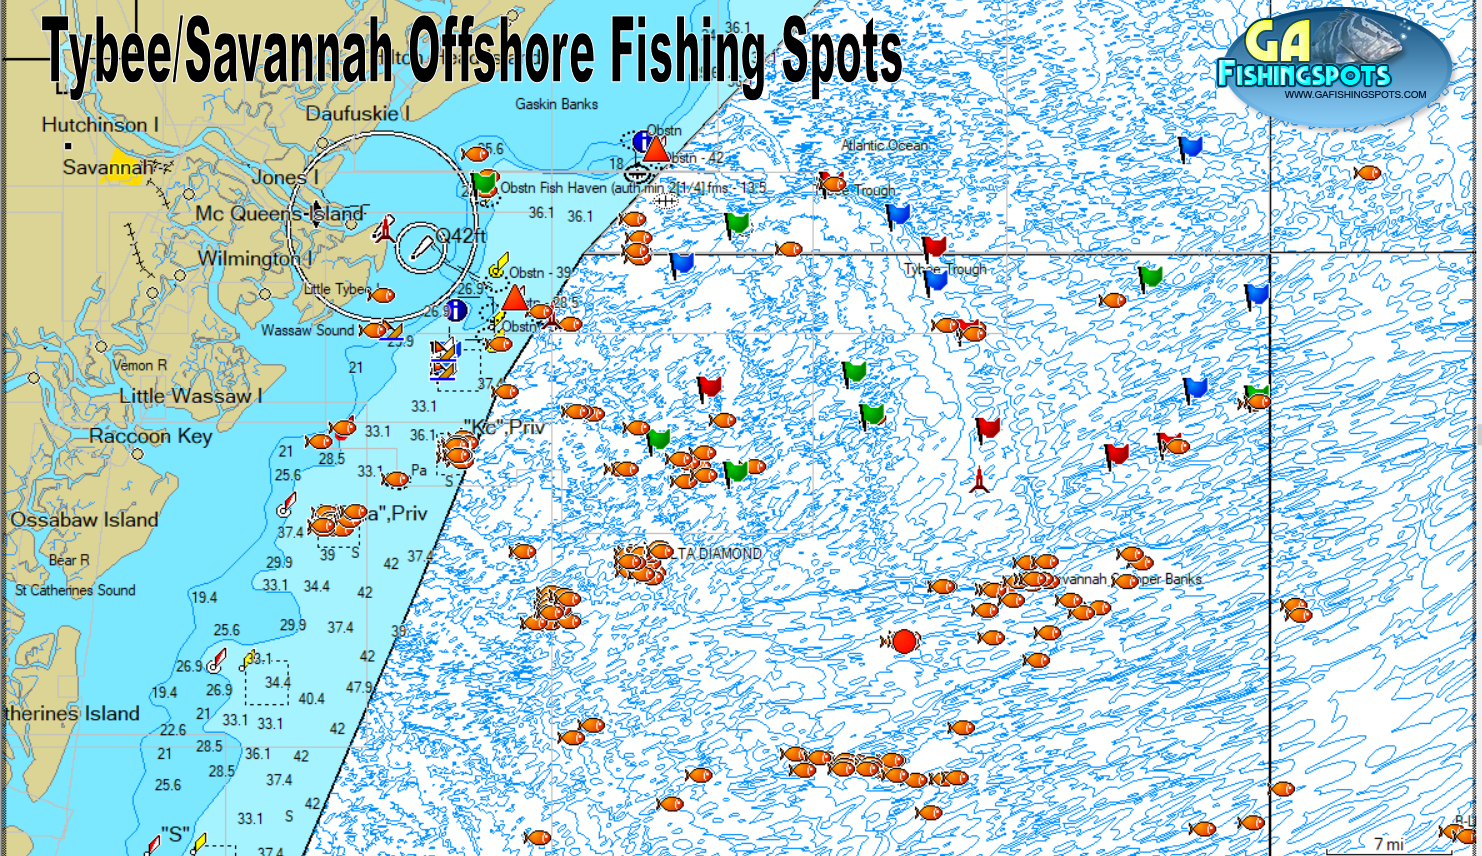 https://gafishingspots.com/wp-content/uploads/2018/09/tybee-savannah-georgia-offshore-fishing-spots.png